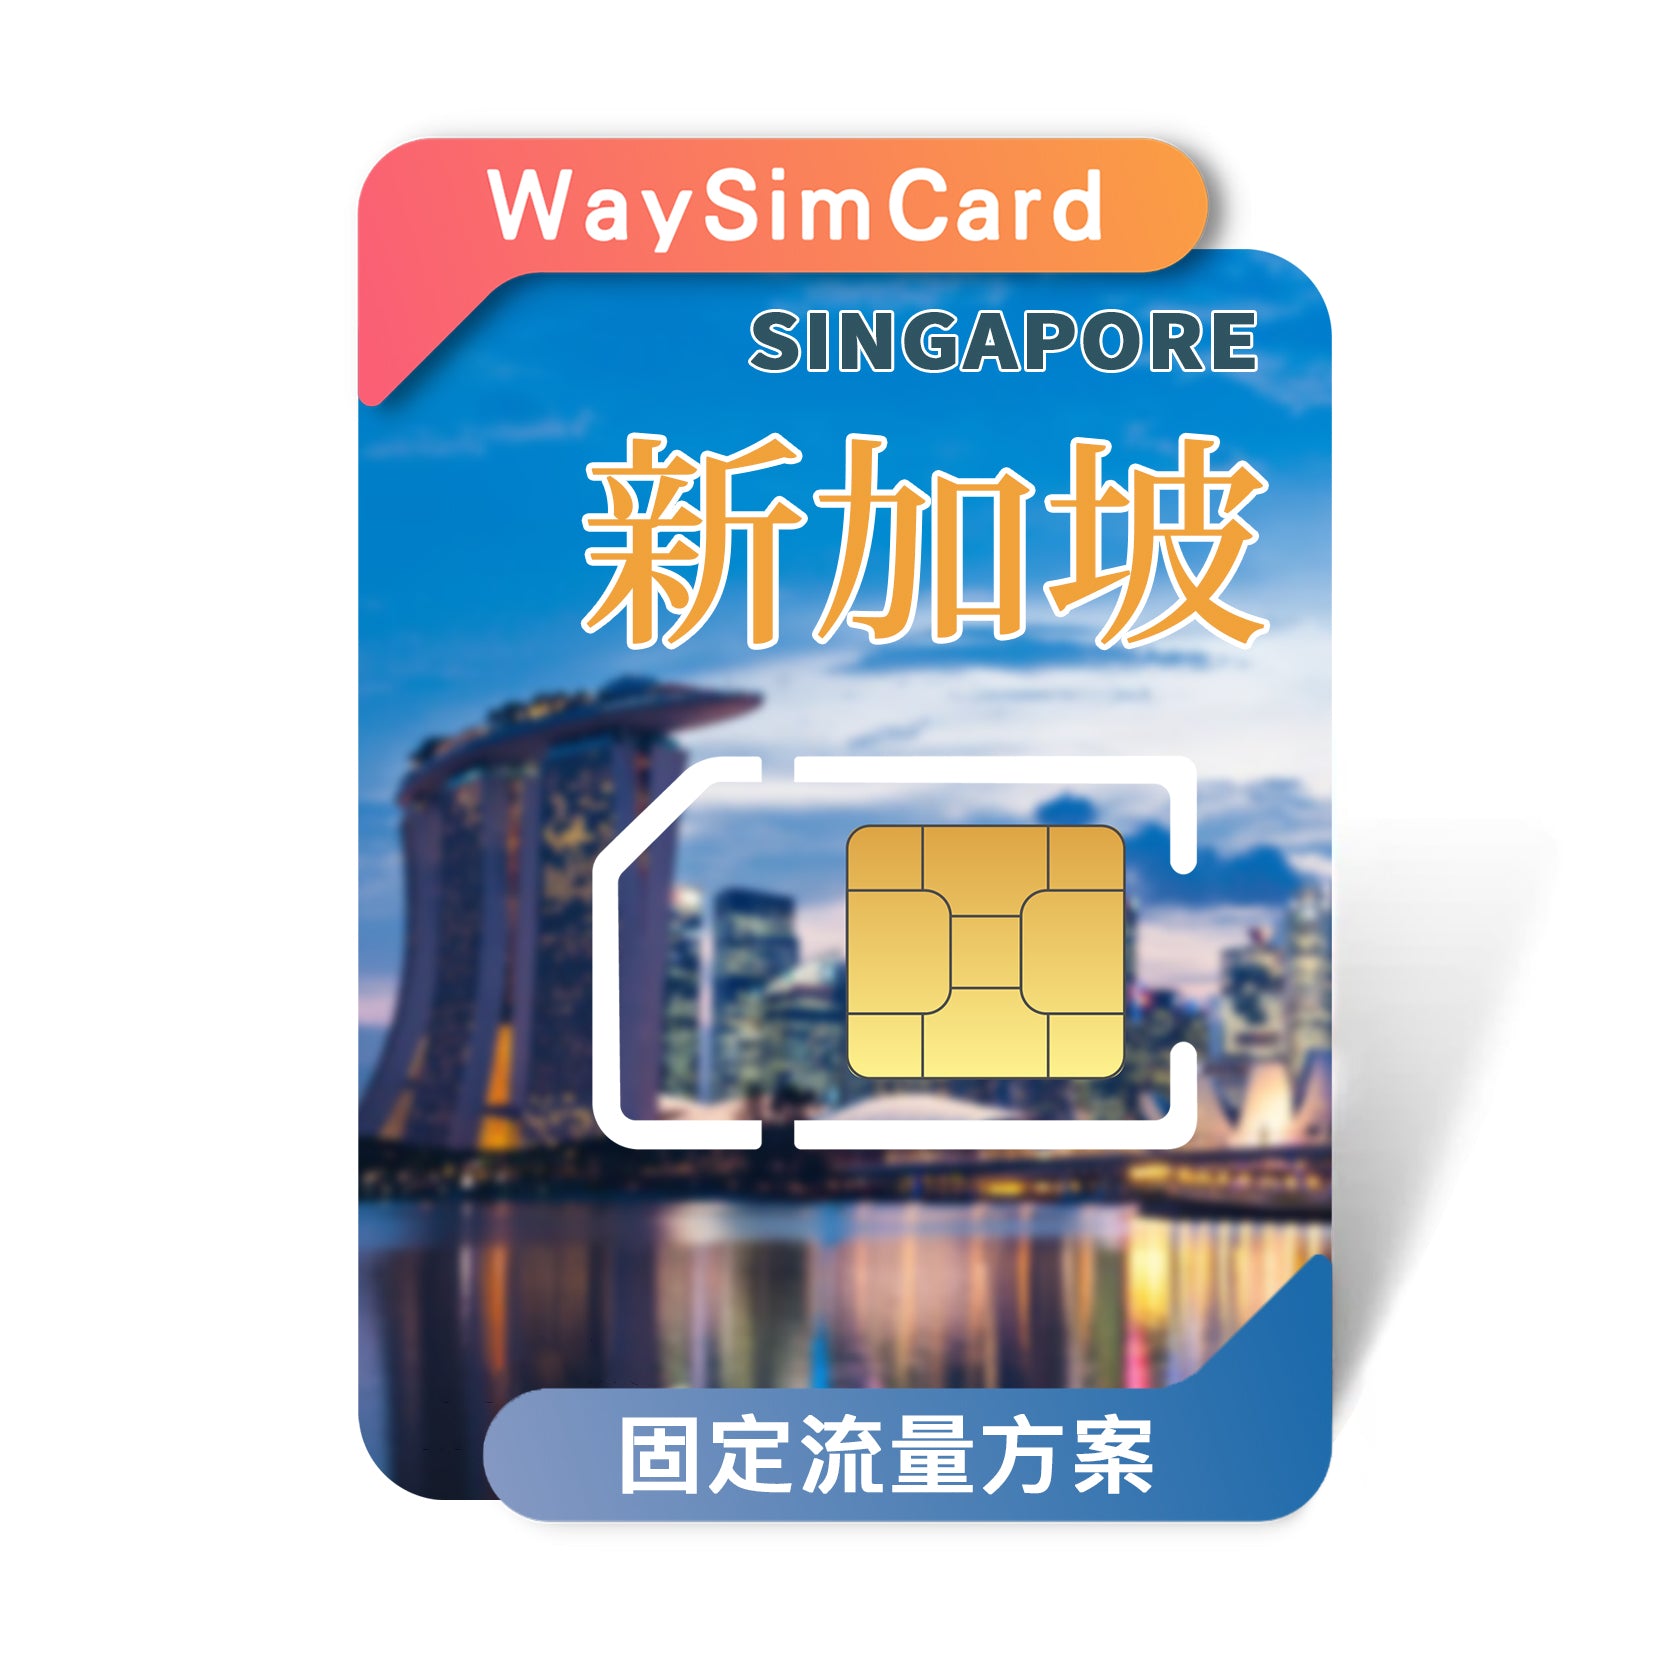 Singapore internet card│4G high-speed fixed traffic│15, 30 days